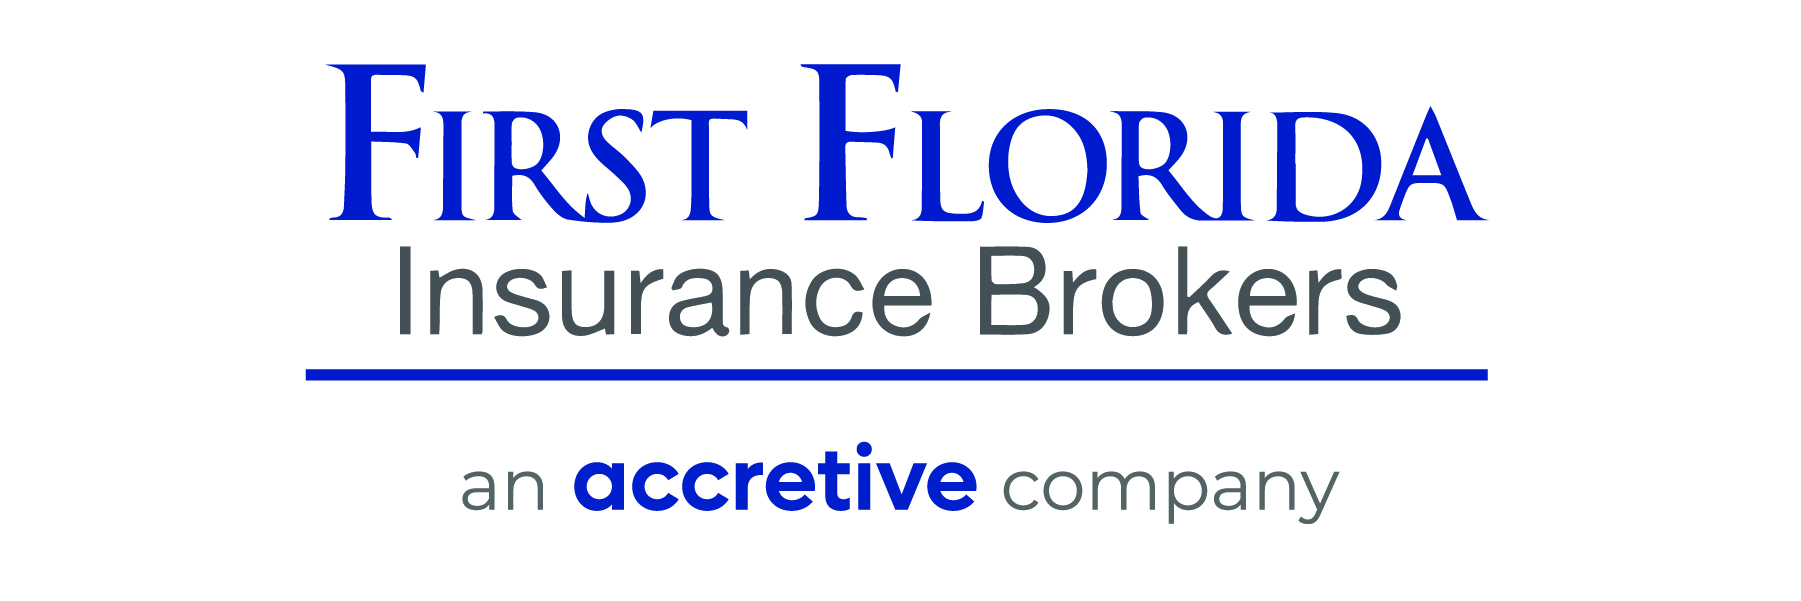 First Florida Insurance Brokers